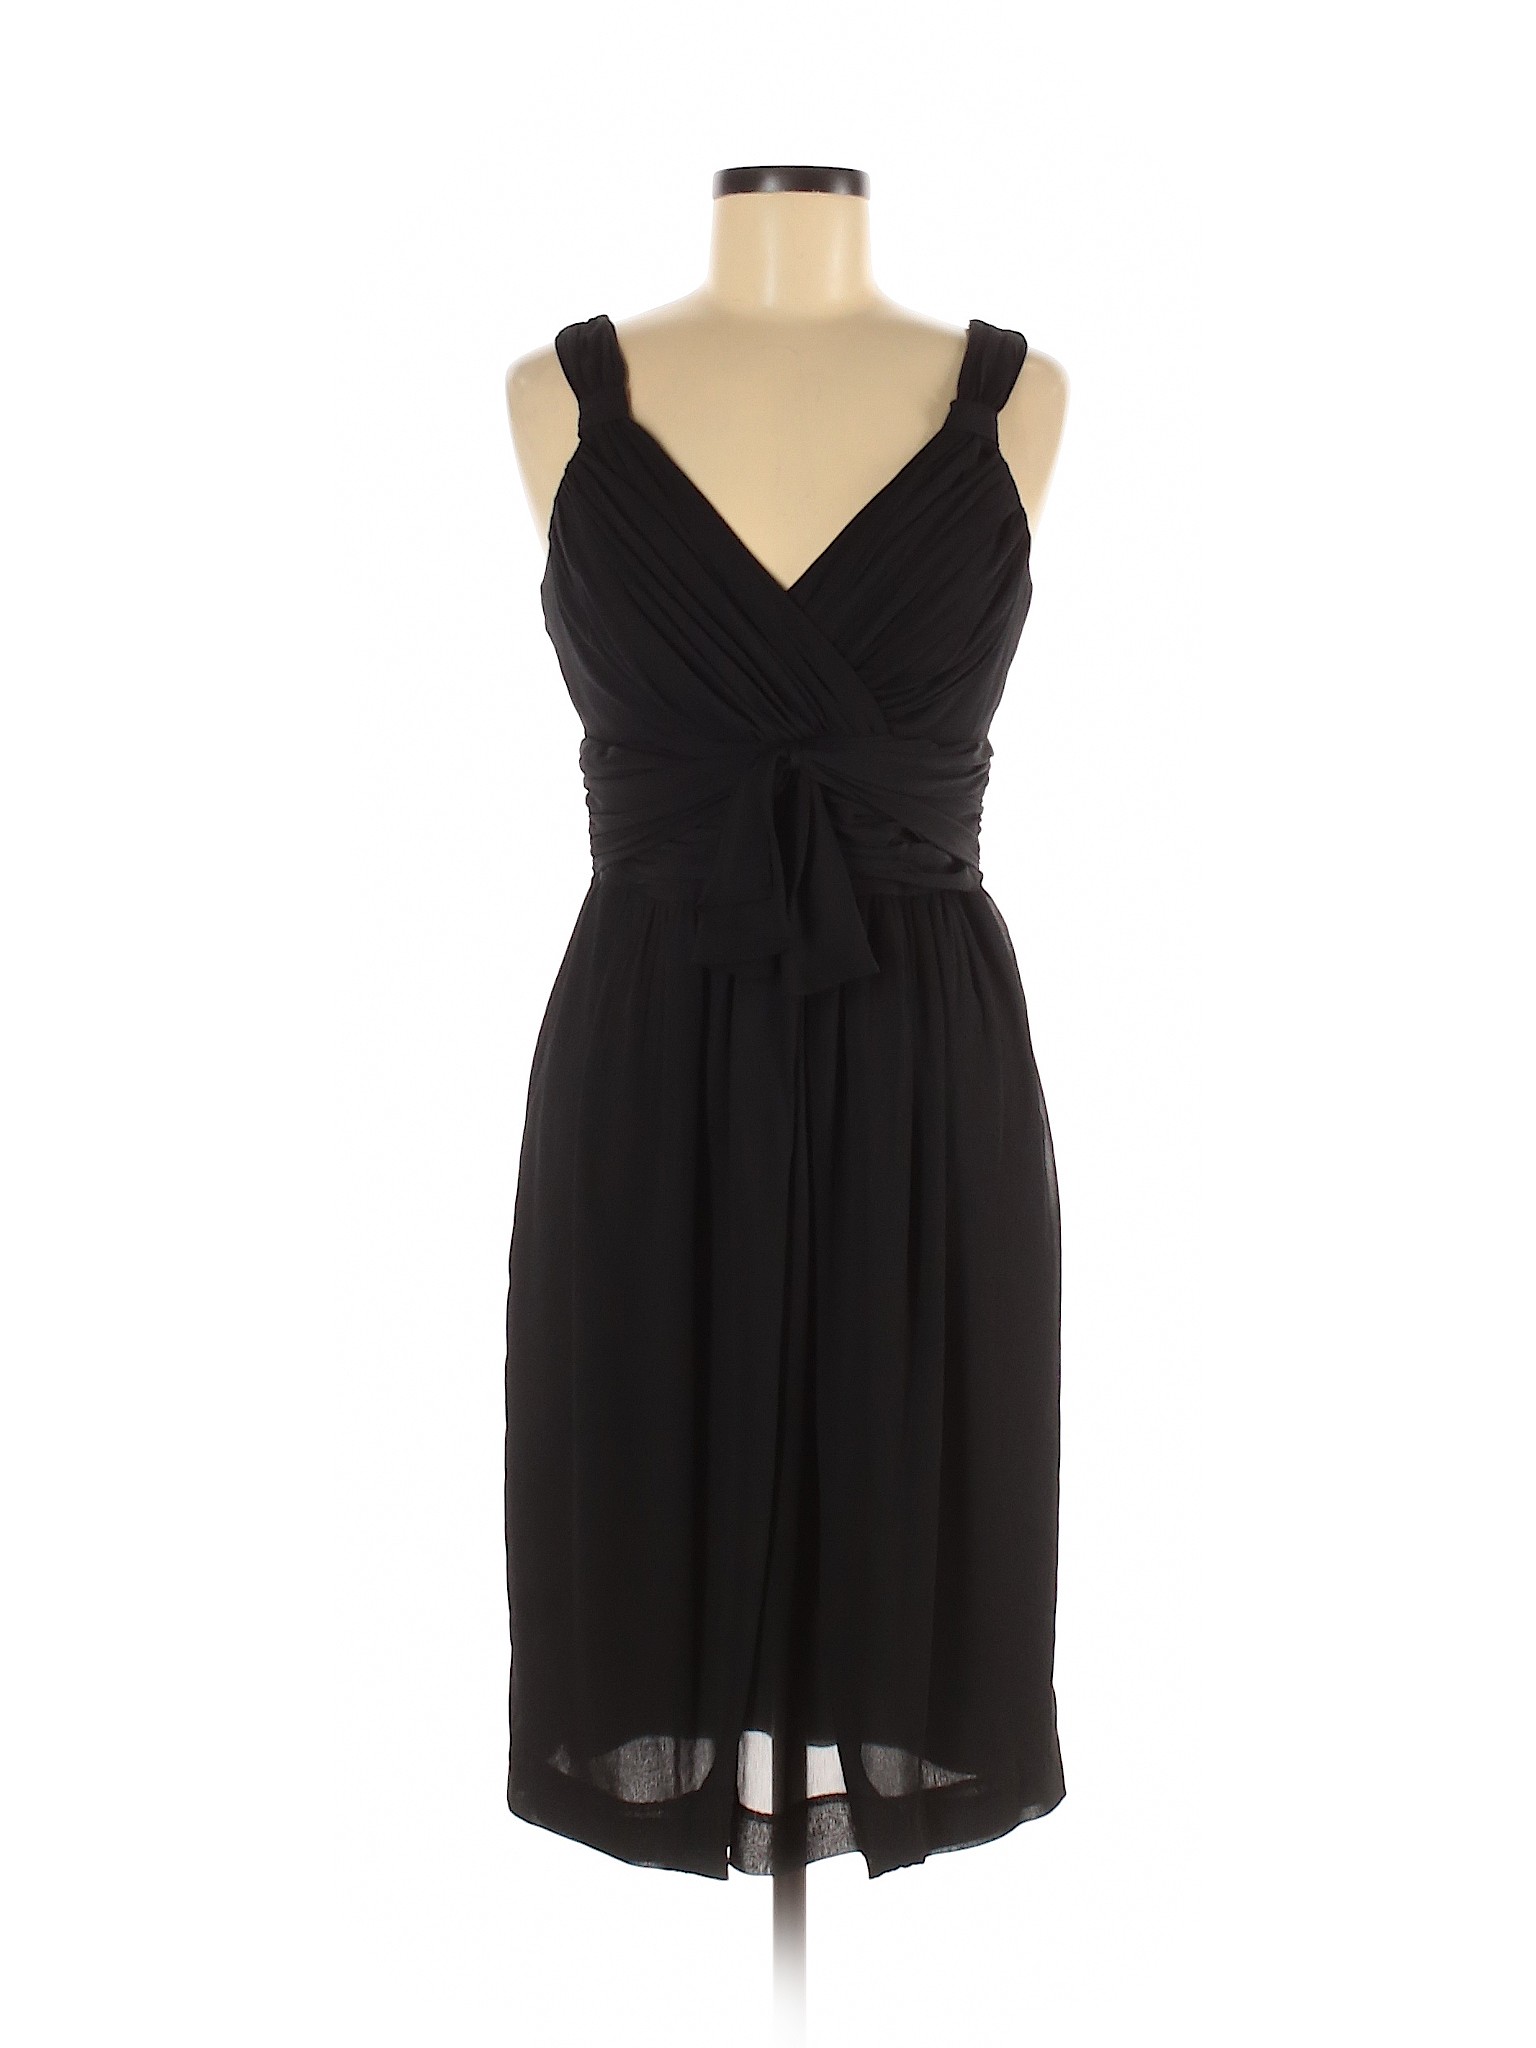 Evan Picone Women Black Cocktail Dress 8 | eBay